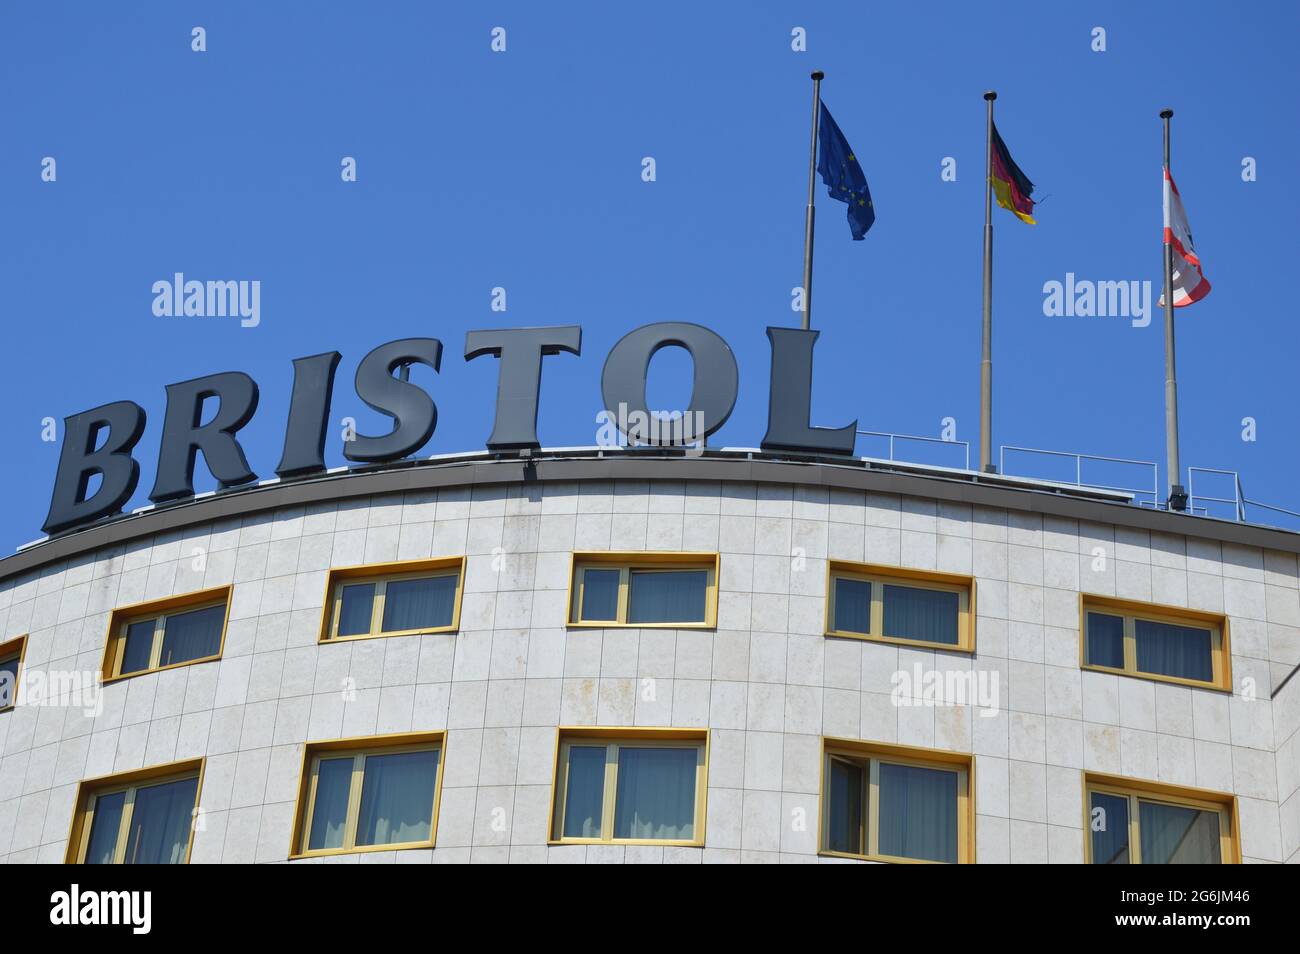 Hotel Bristol Berlin - Kurfürstendamm, Berlin, Germany - July 6 2021. Stock Photo